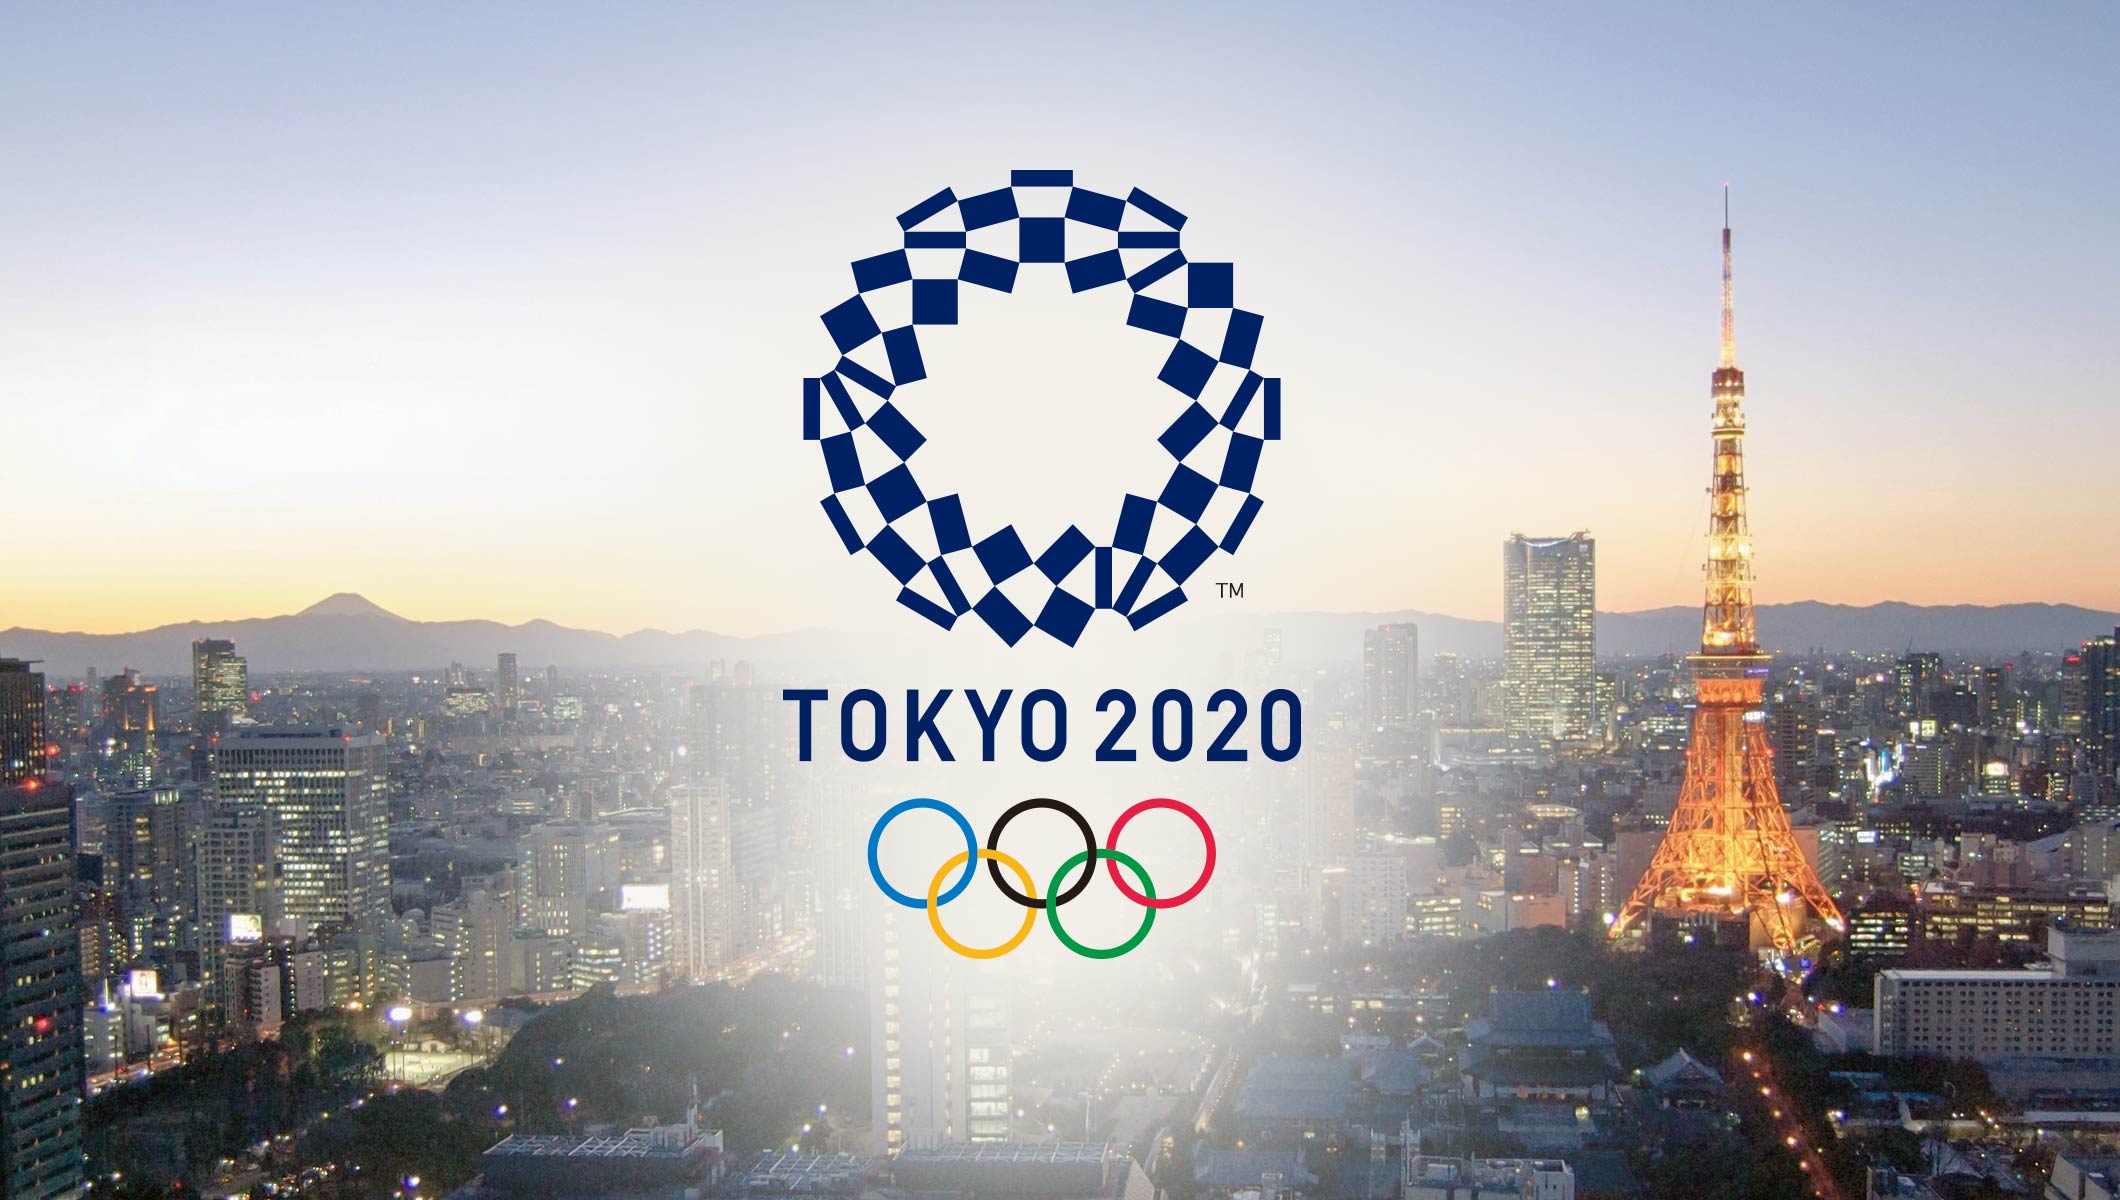 Zambia U-23 keen to qualify for 2020 Olympics in Tokyo - Sports Leo